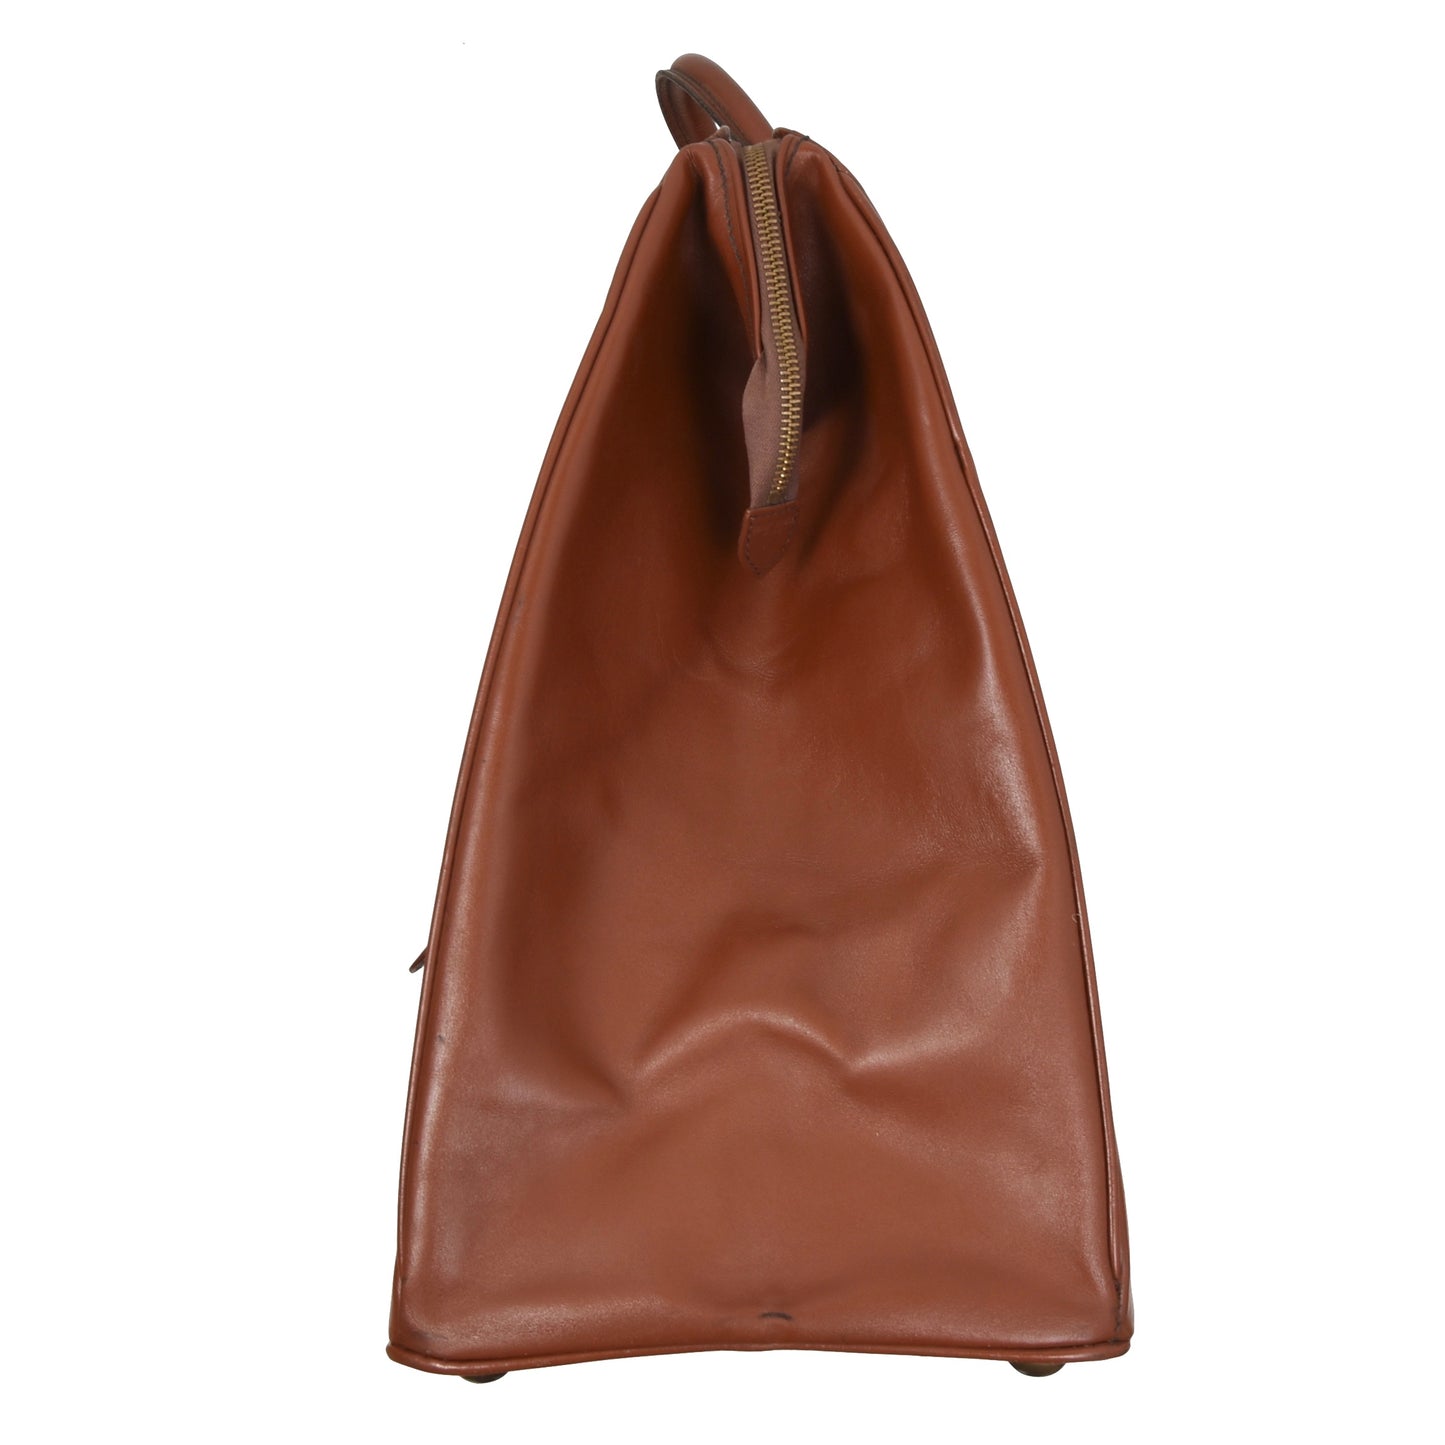 F. Schulz Wien Leather Weekender Bag - Tan